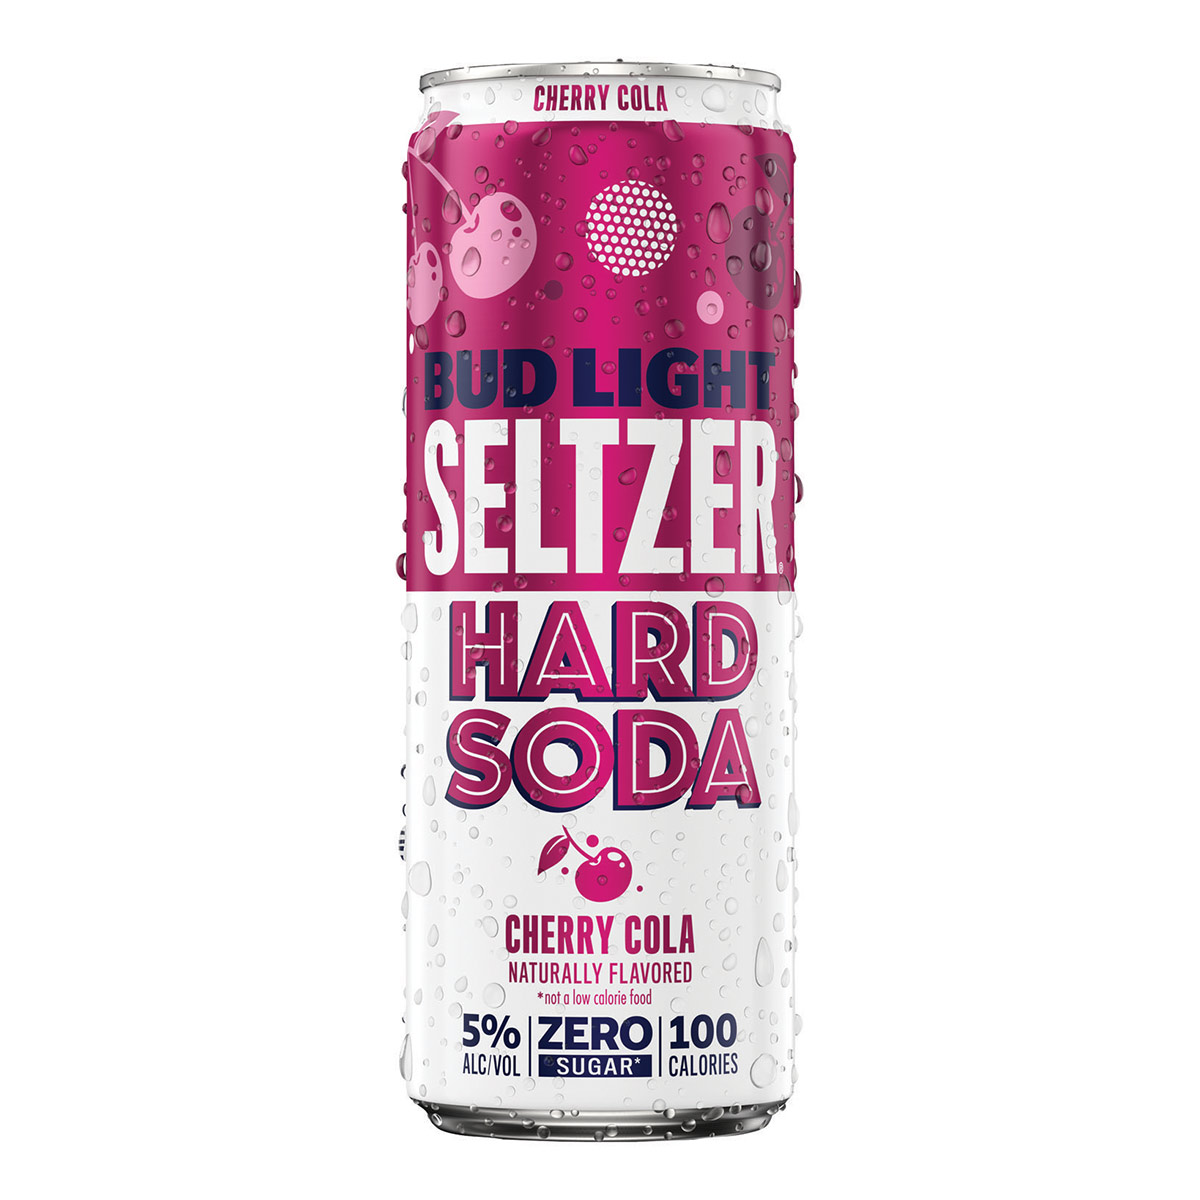 Bud Light Seltzer Hard Soda: Cherry Cola